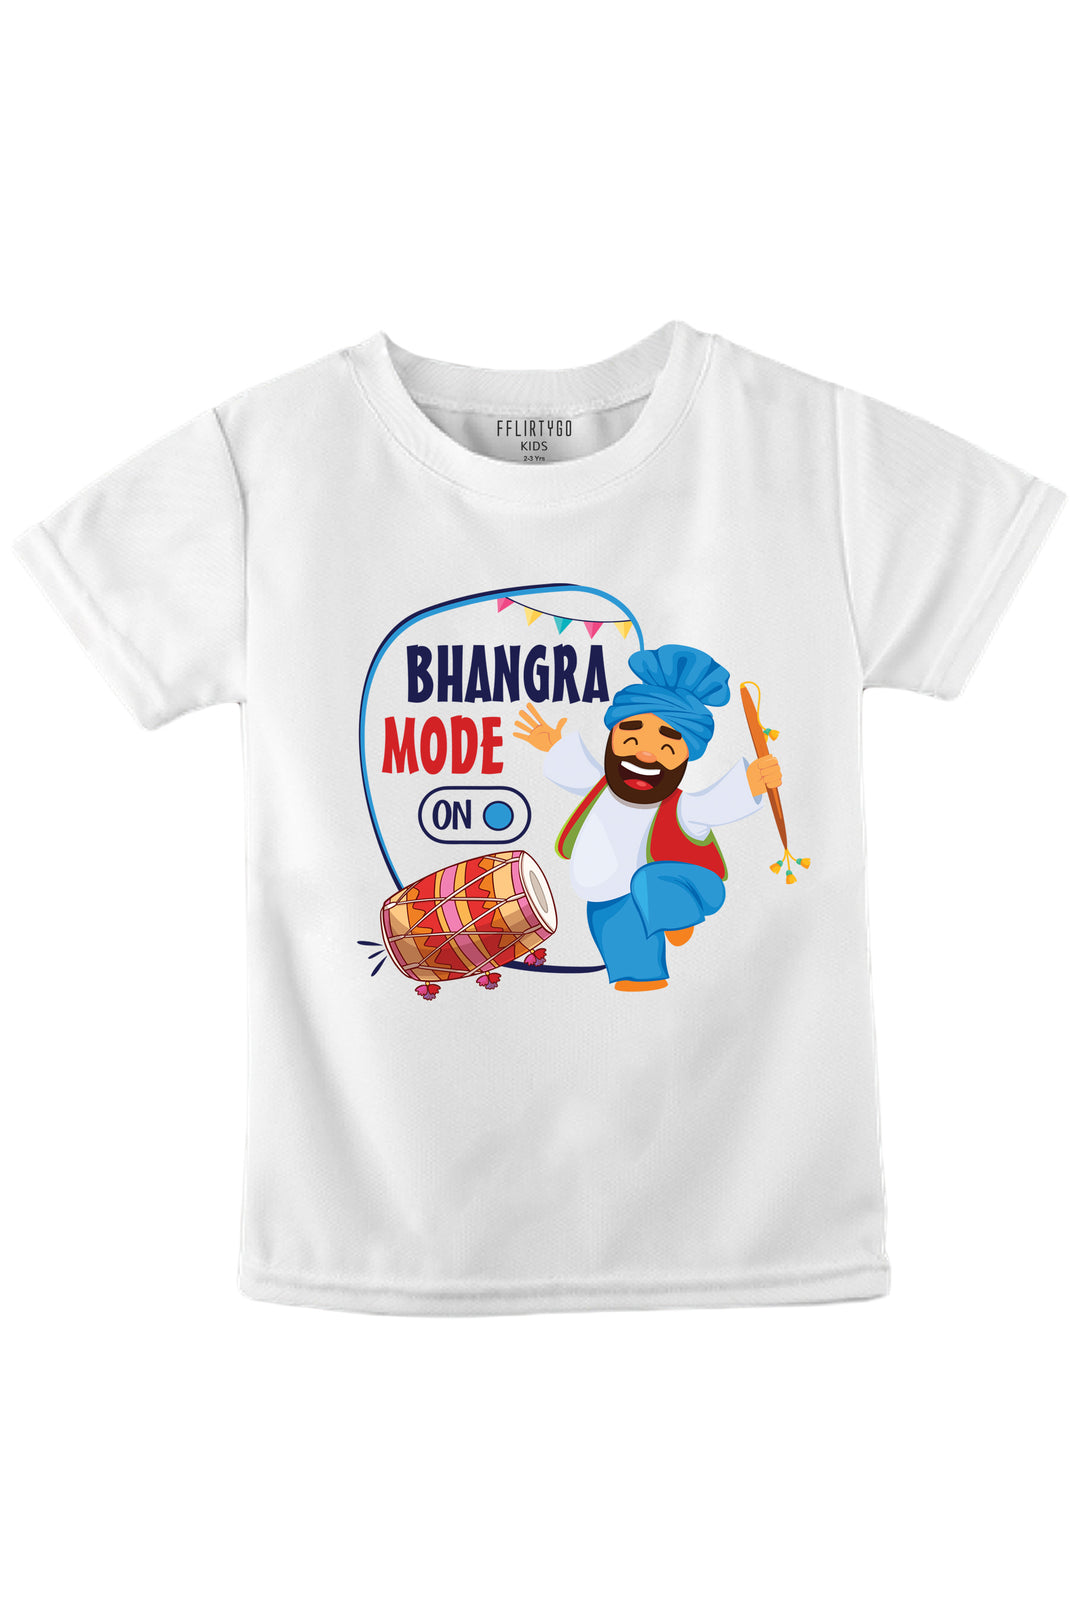 Bhangra Mode On